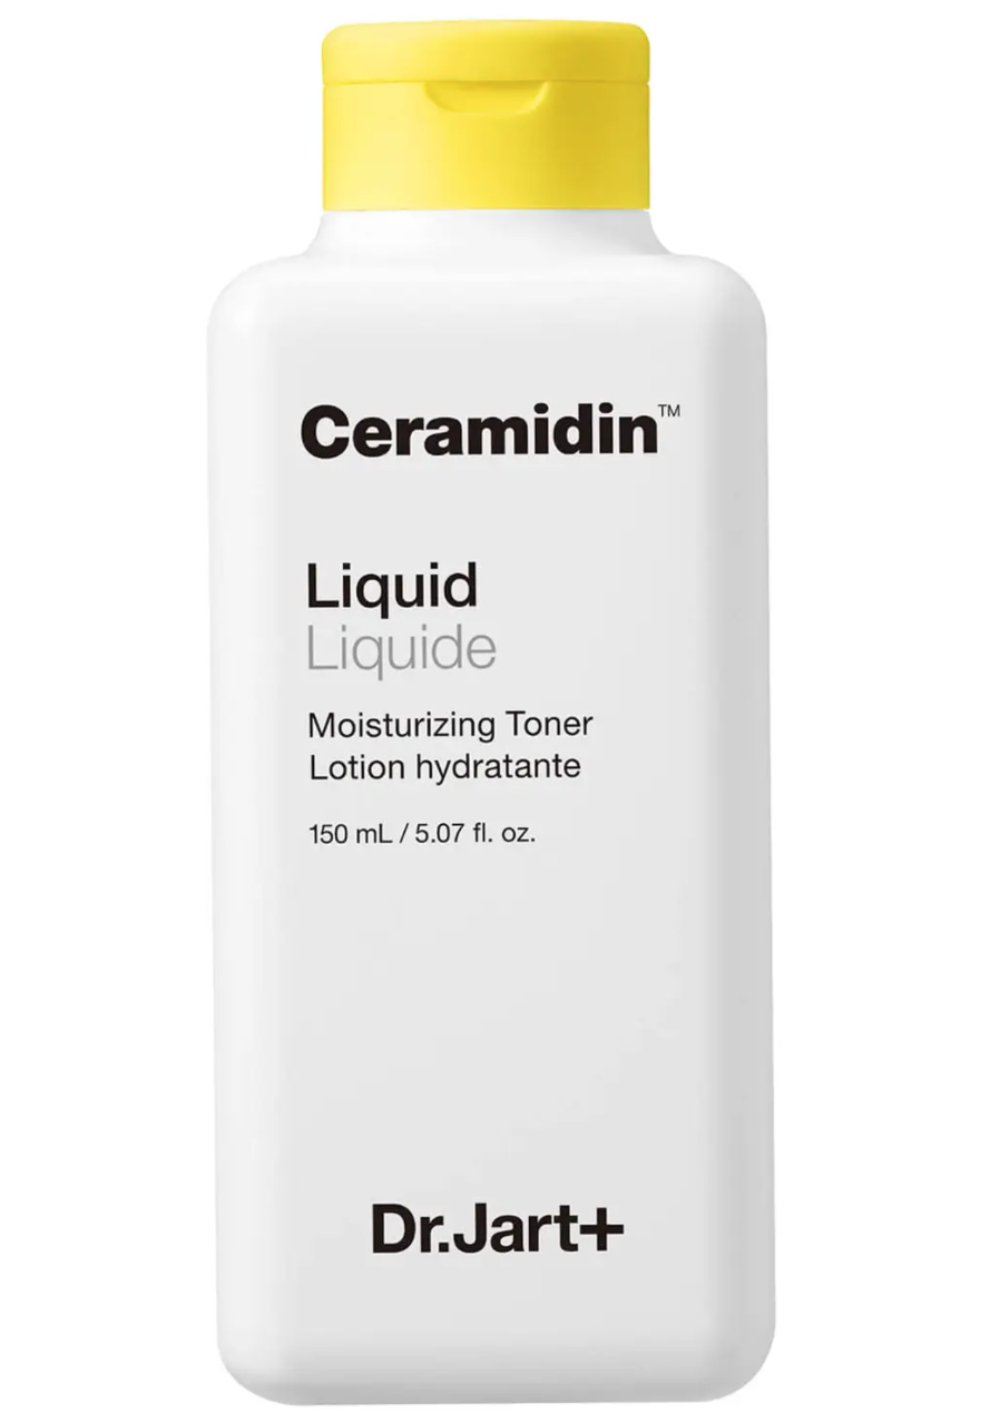 Dr. Jart+ Ceramidin Liquid 150ml - The Face Method